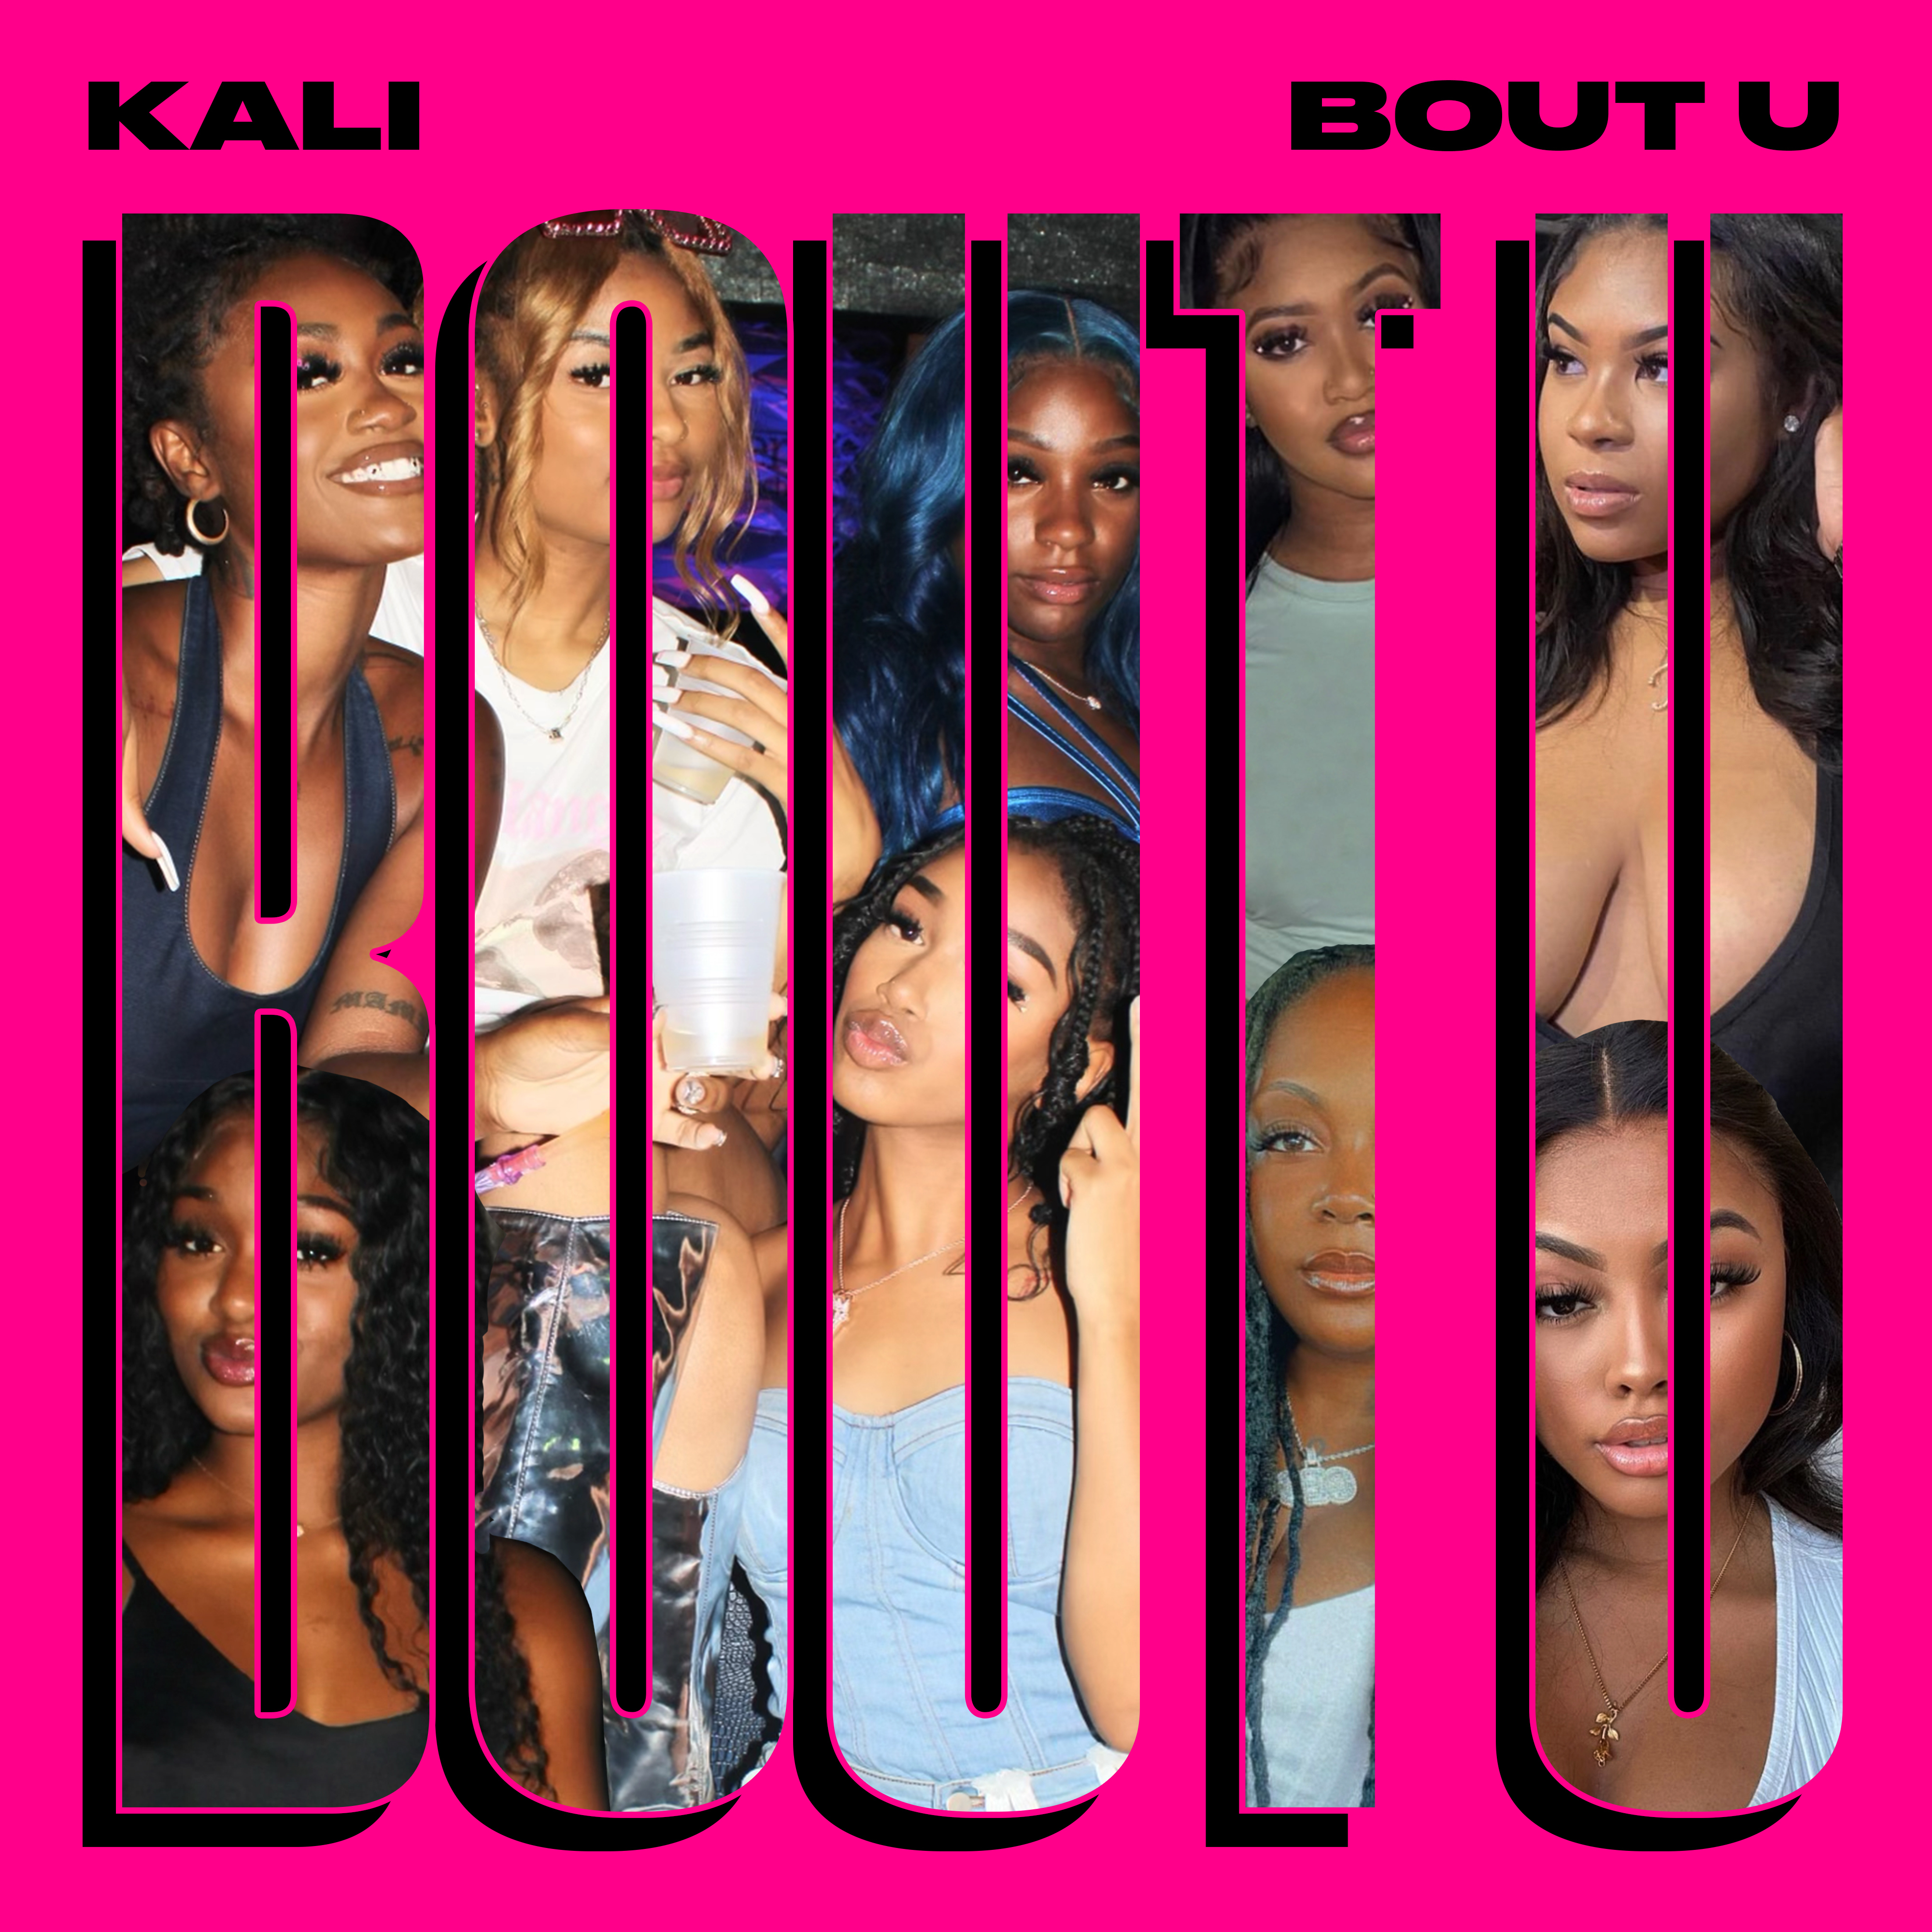 I-download Bout U